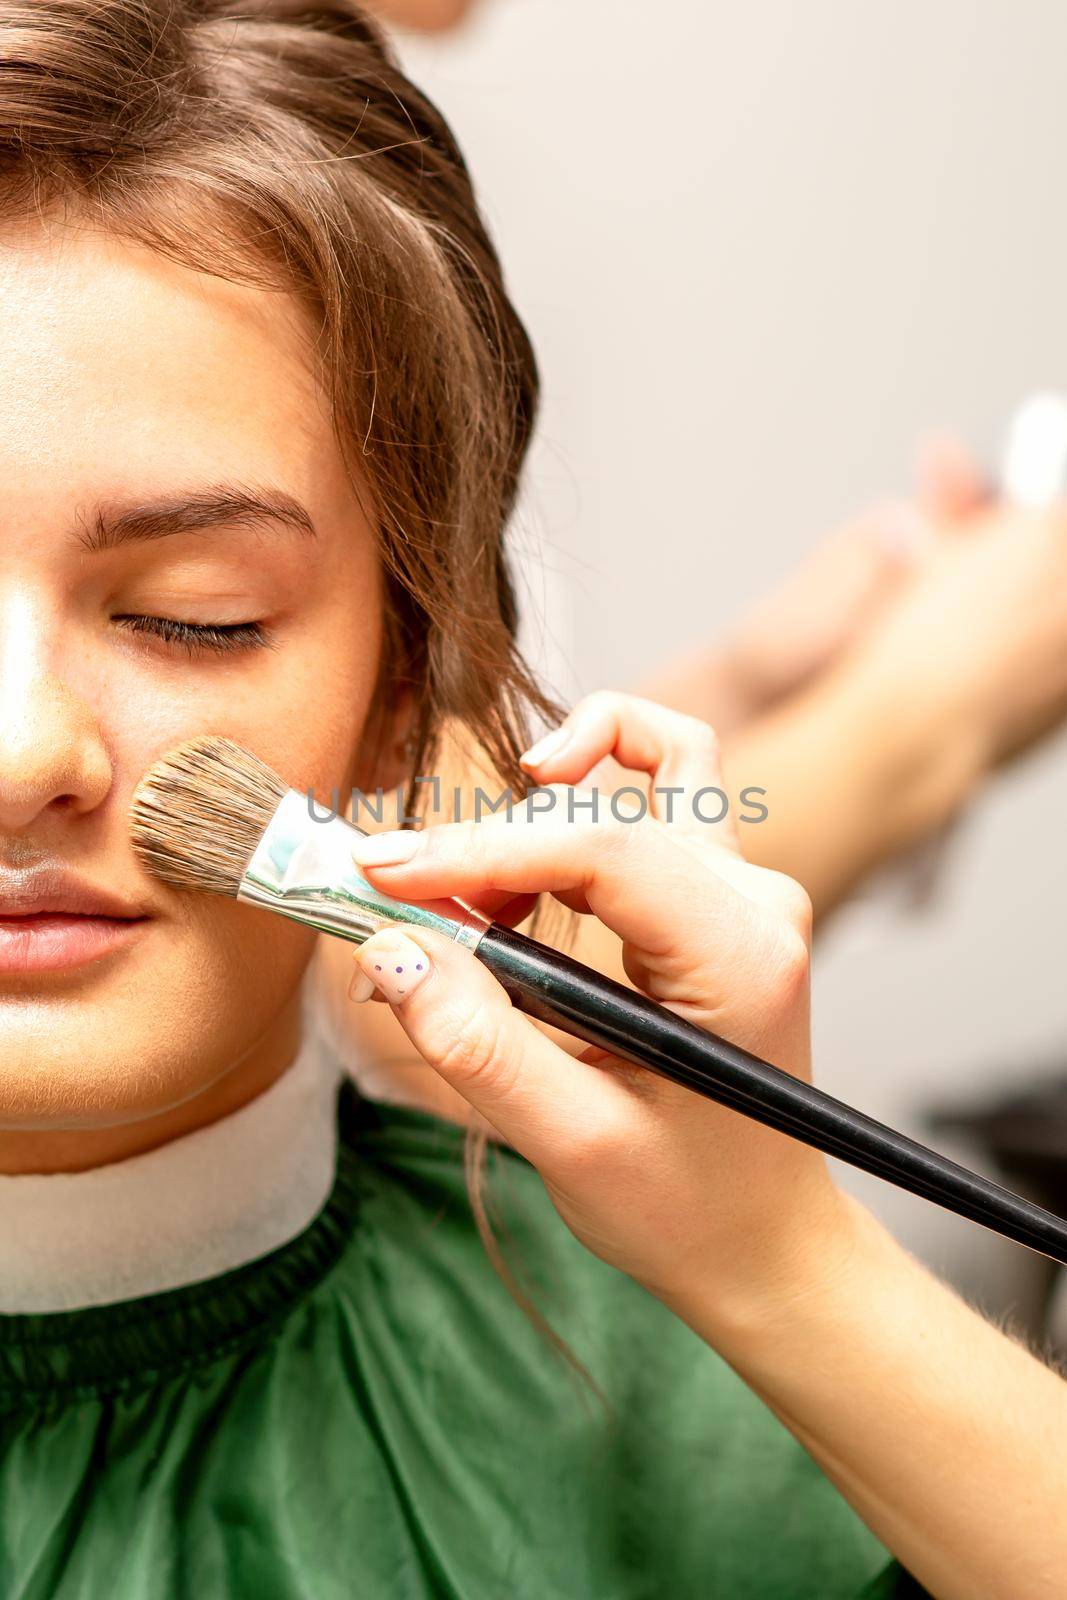 The makeup artist applies a cosmetic tonal foundation on the face using a makeup brush. by okskukuruza